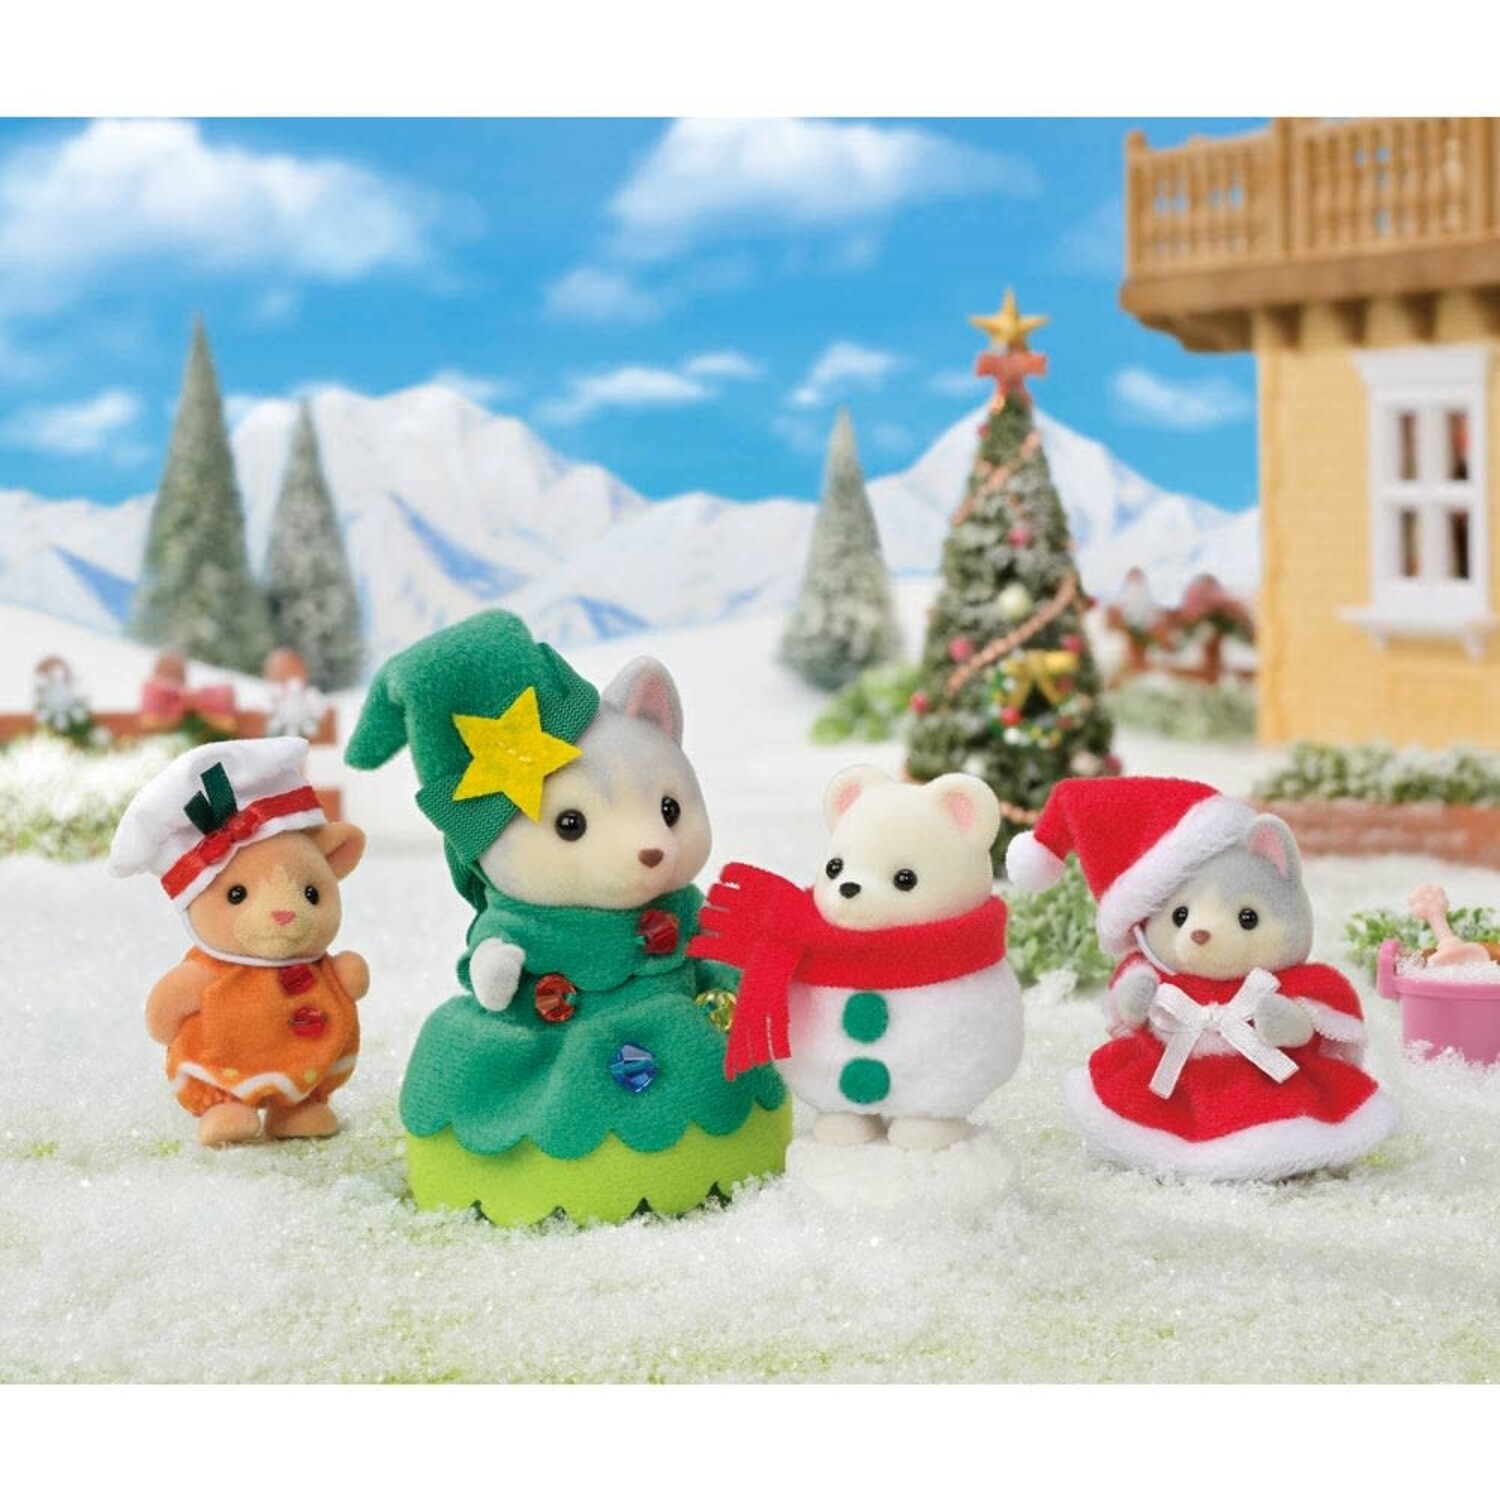 Adorable Christmas - Sylvanian Families Shop, Online